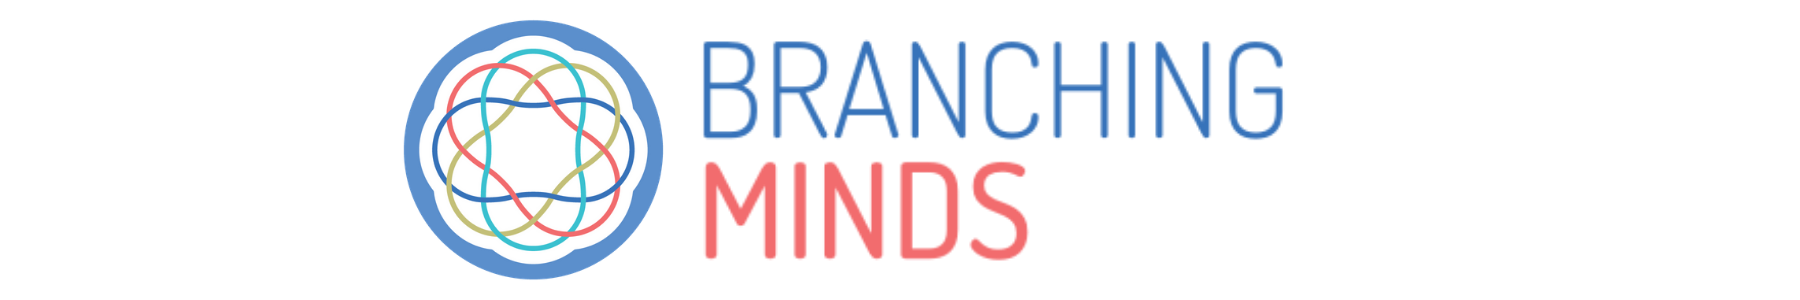 Branching Minds, Inc. | IMS Global